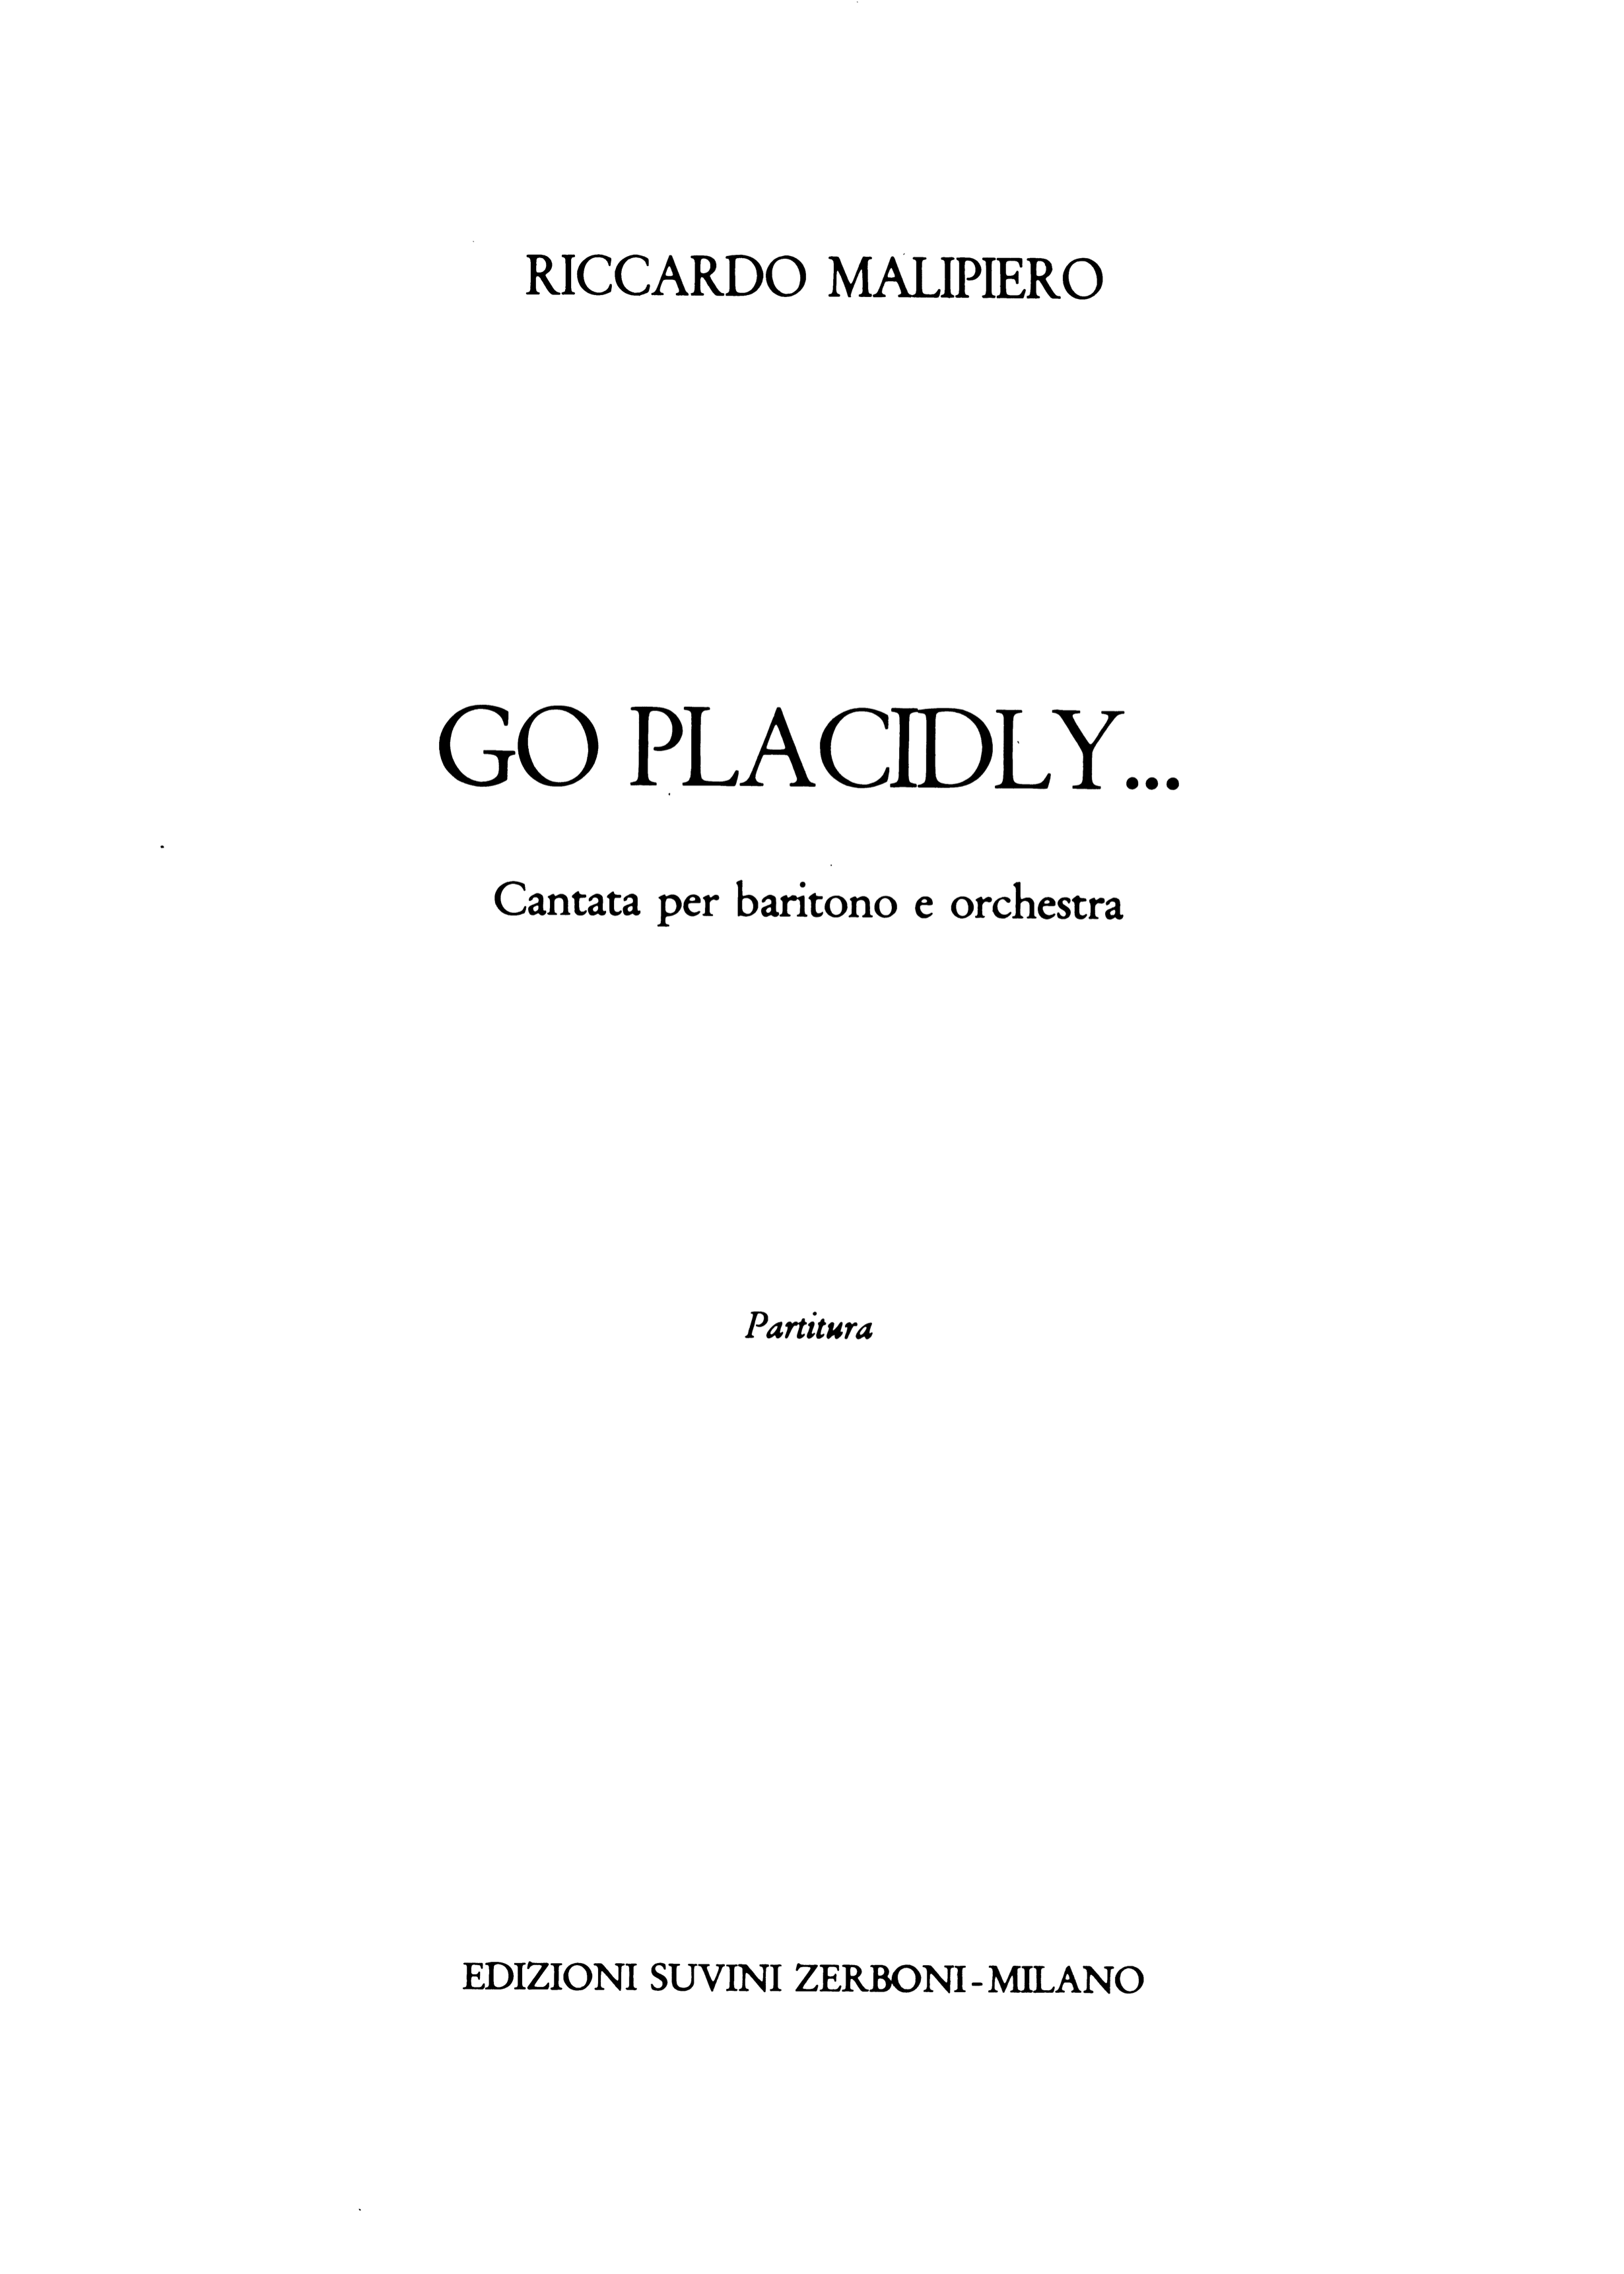 Go placidly_Malipiero Riccardo 1